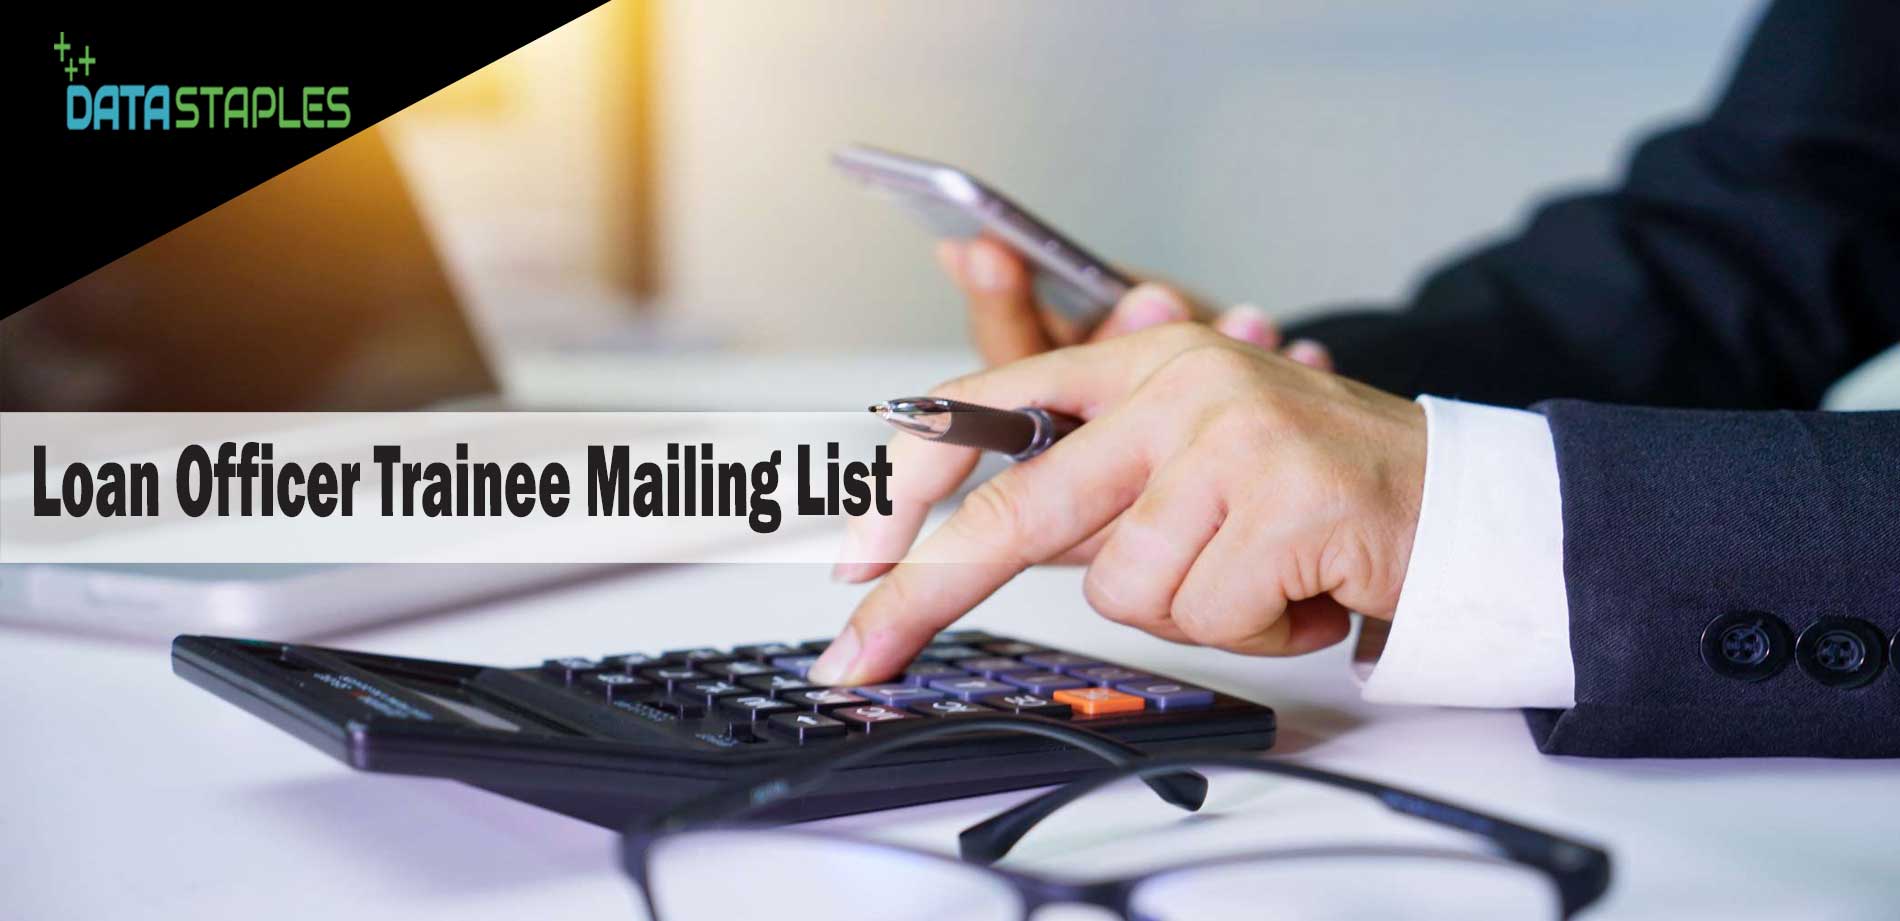 Loan Officer Trainee Mailing List | DataStaples